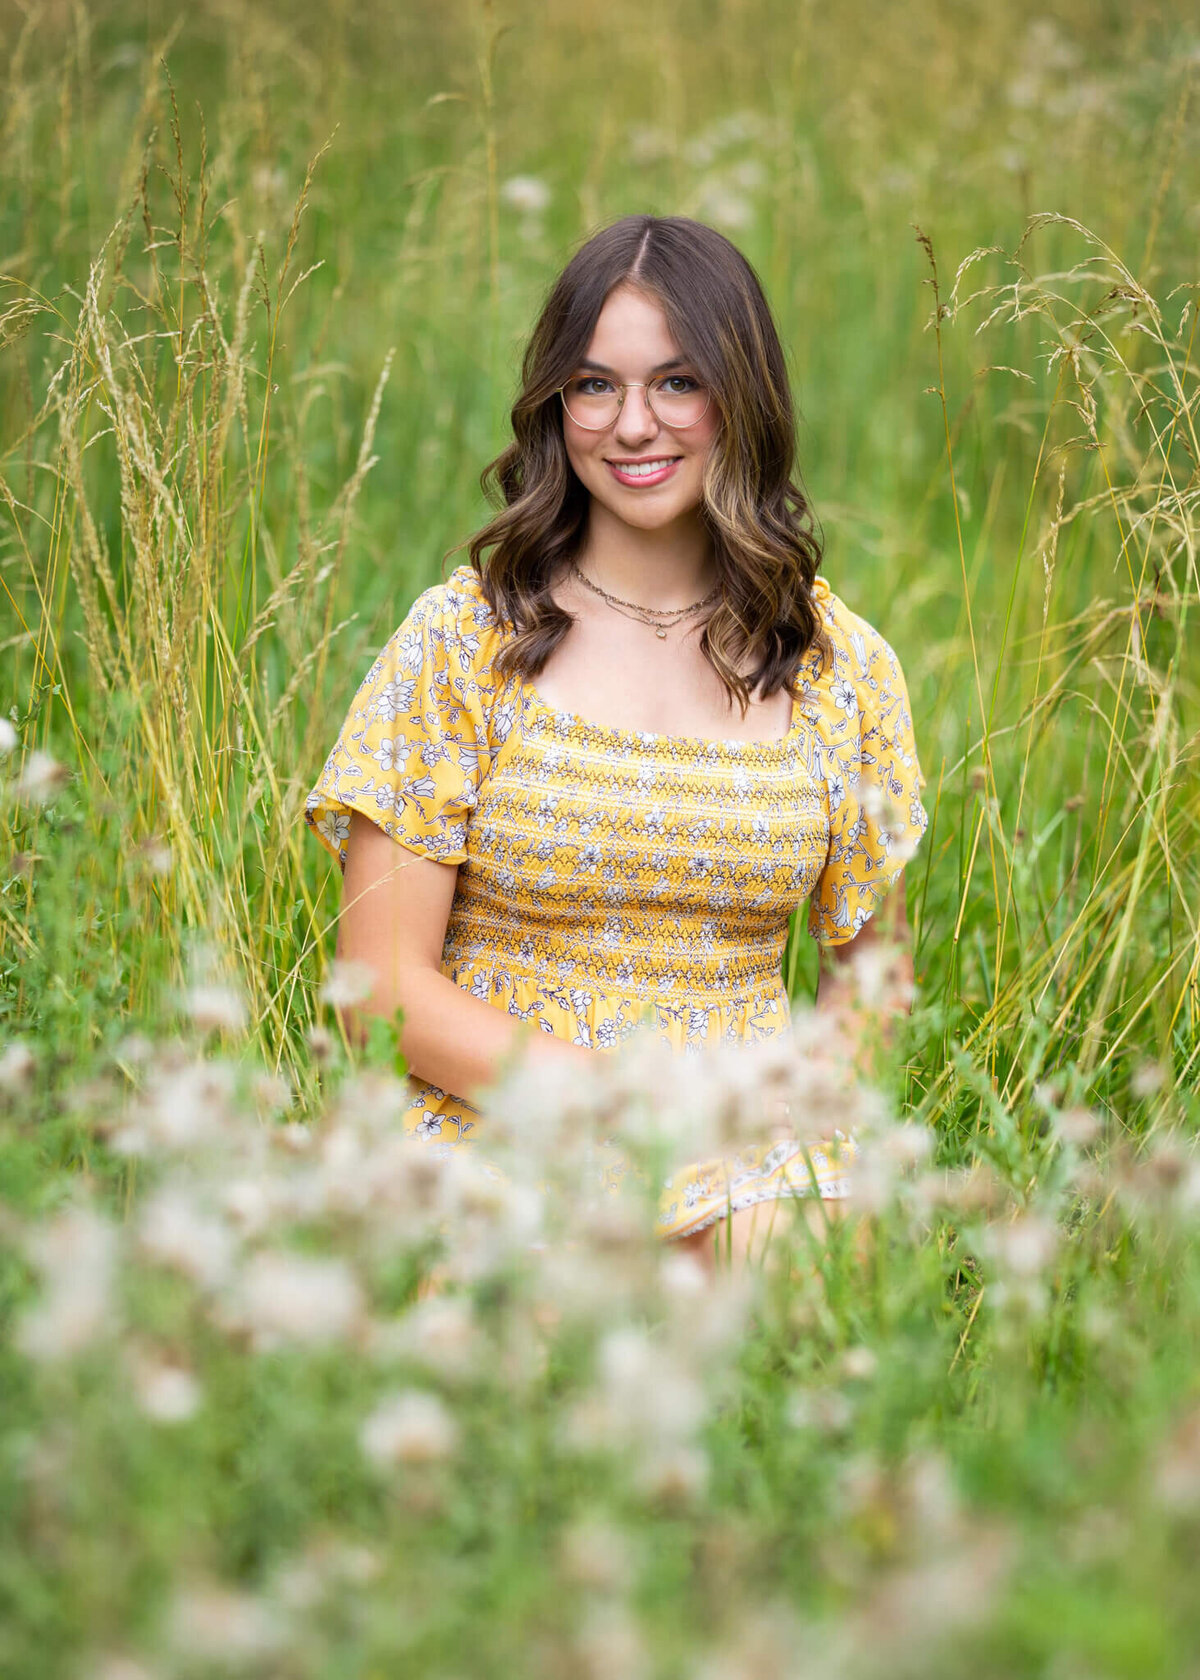 teenage girl in yellow sun dress sitting in a tall grassy field